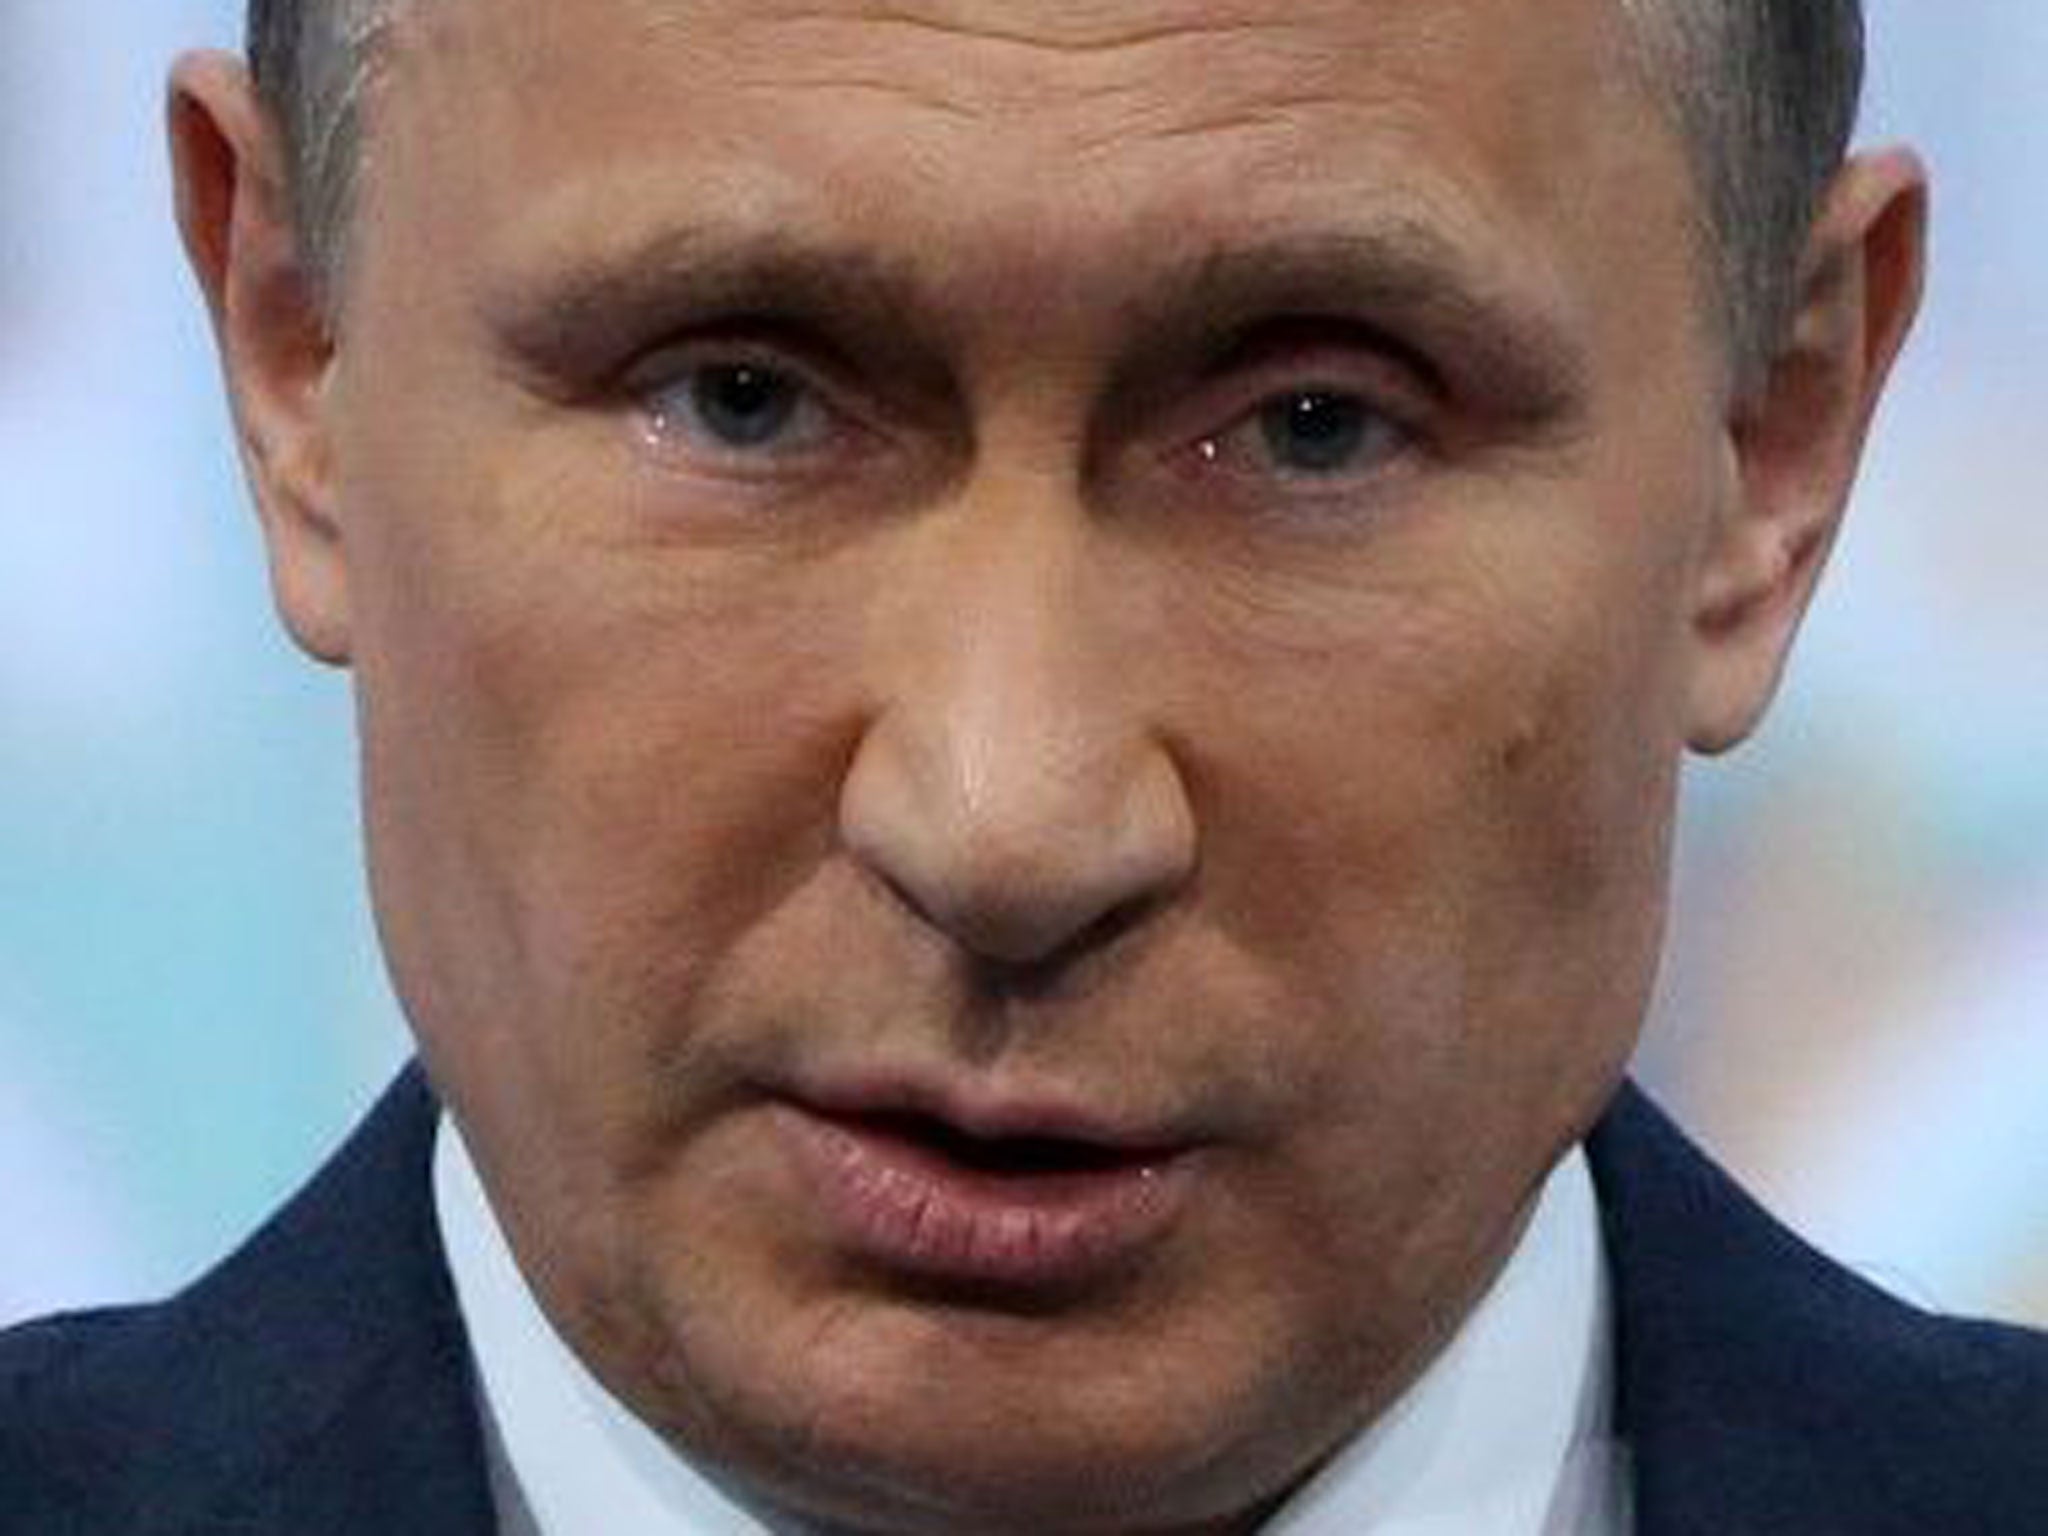 Power dressing: Russian President Vladimir Putin